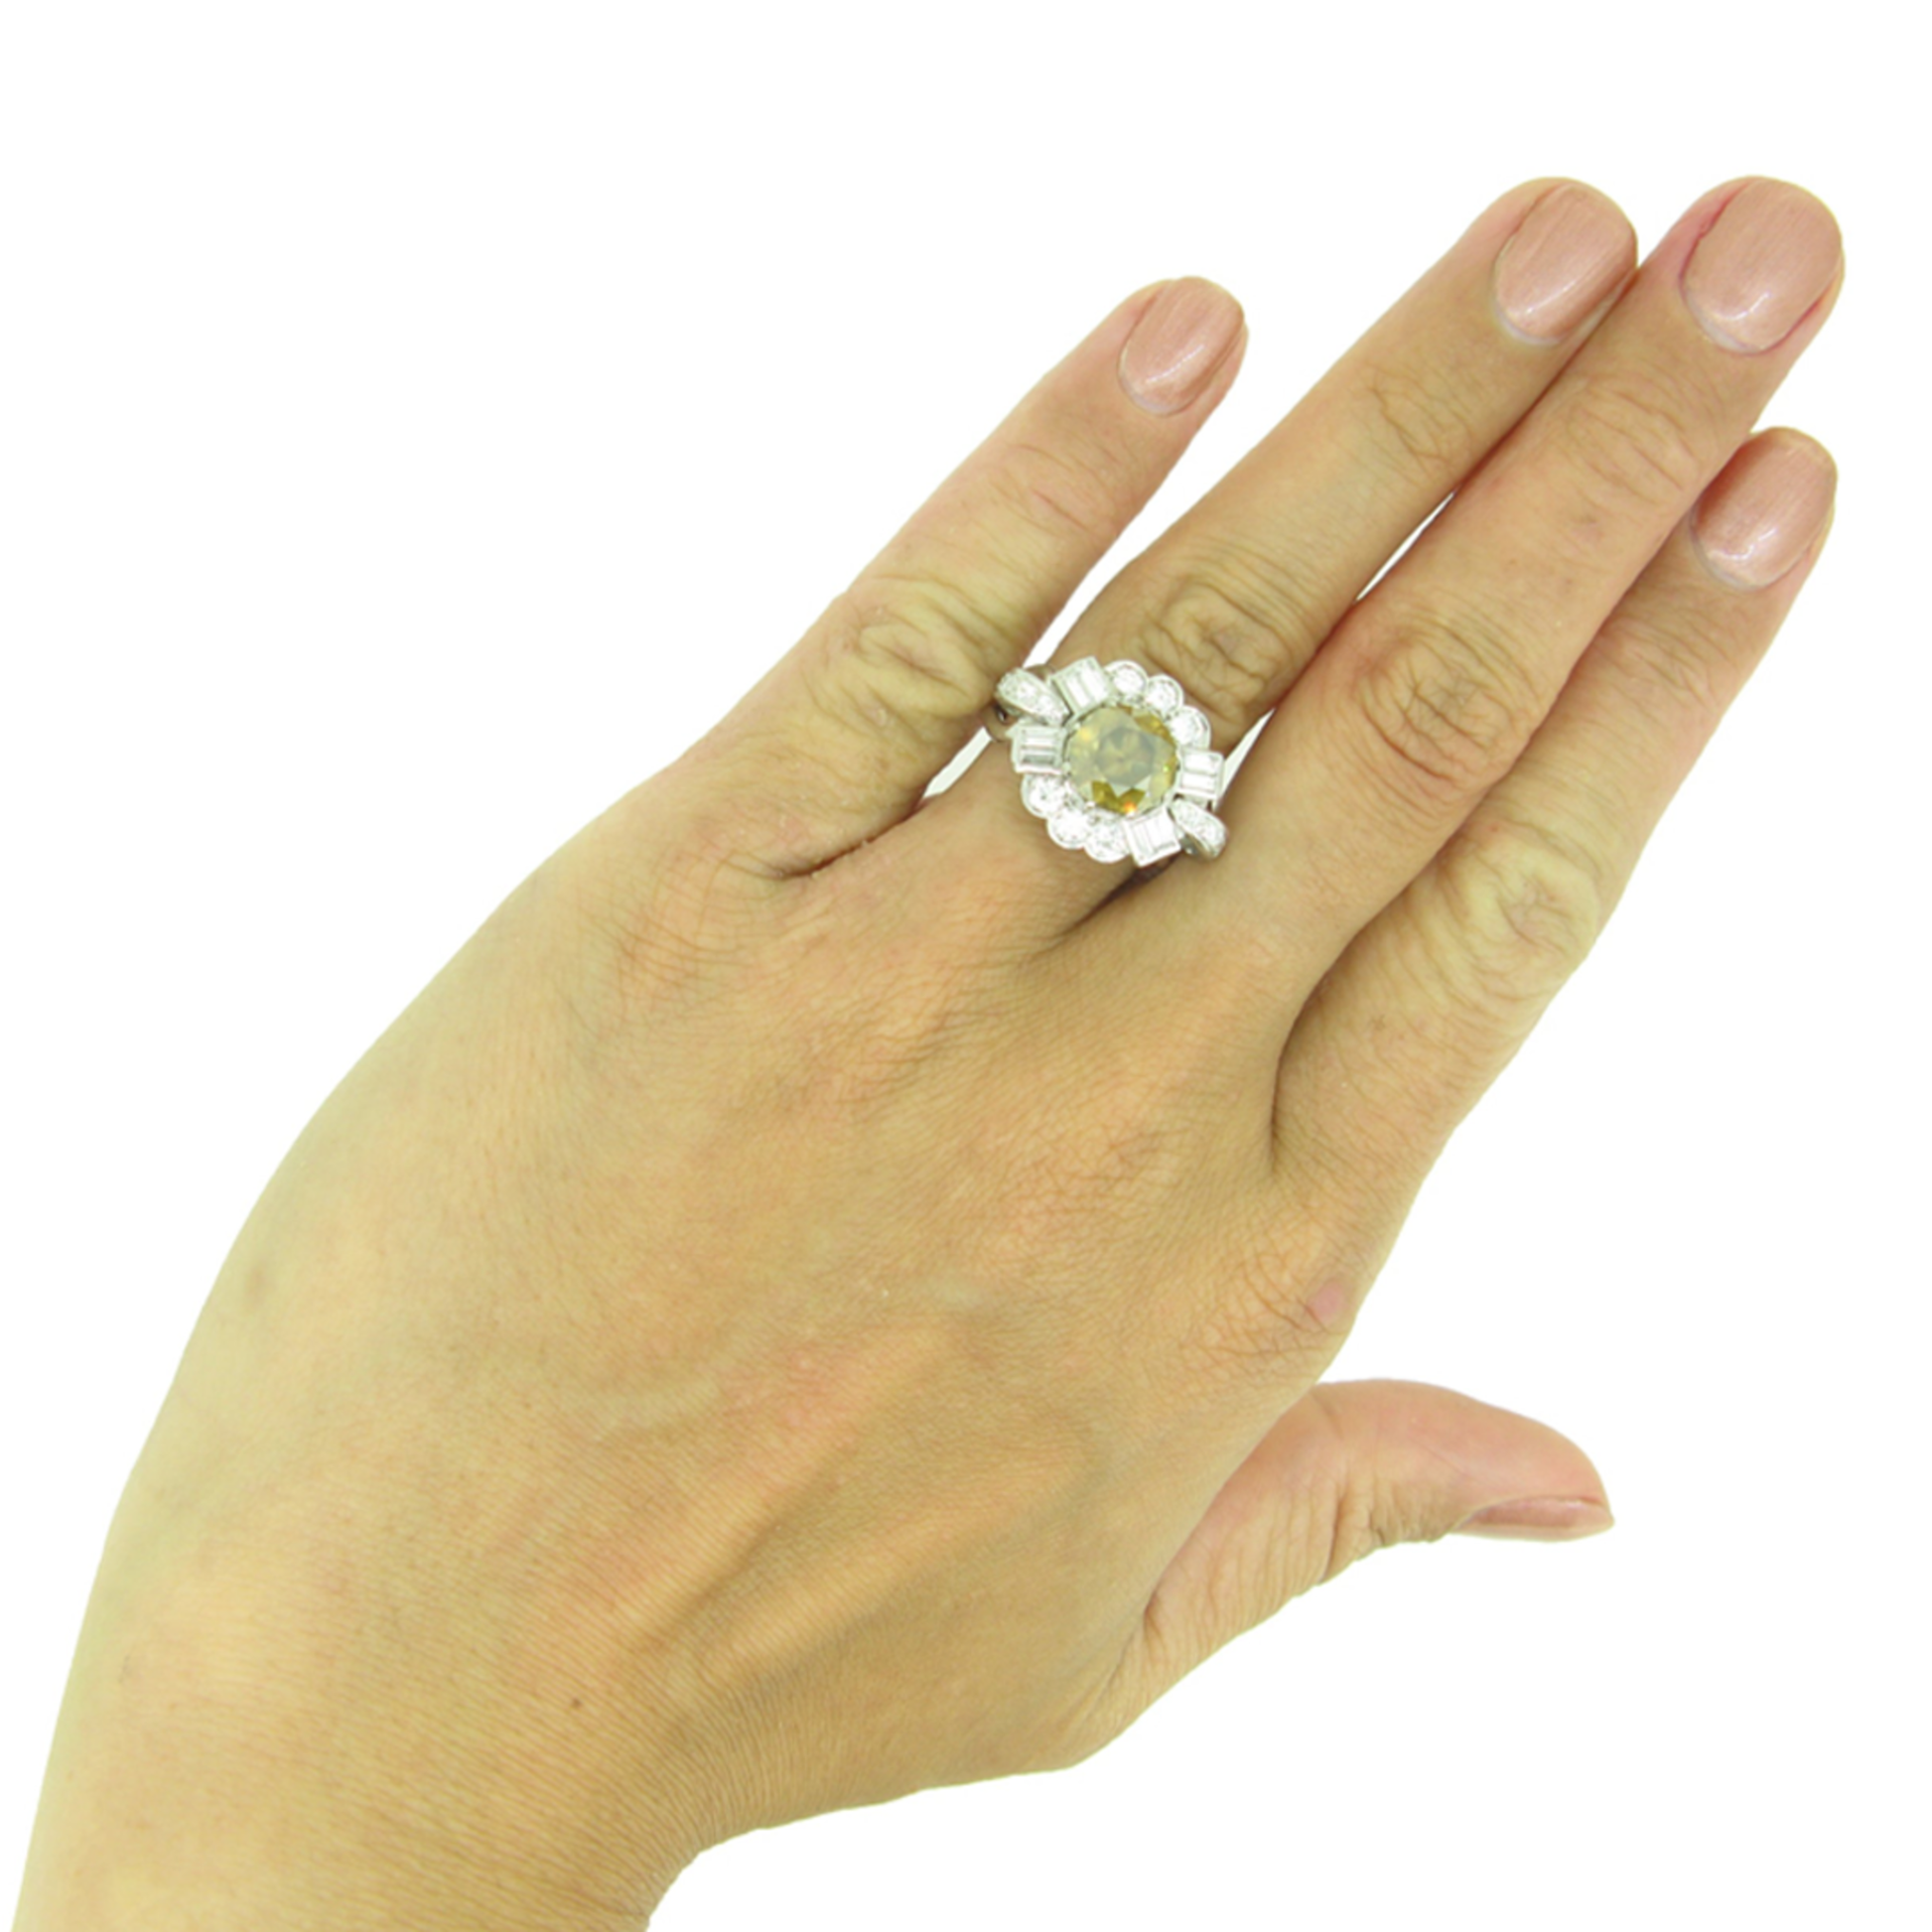 1950s 18KT White Gold Yellow-Brown & White Diamond Ring on finger